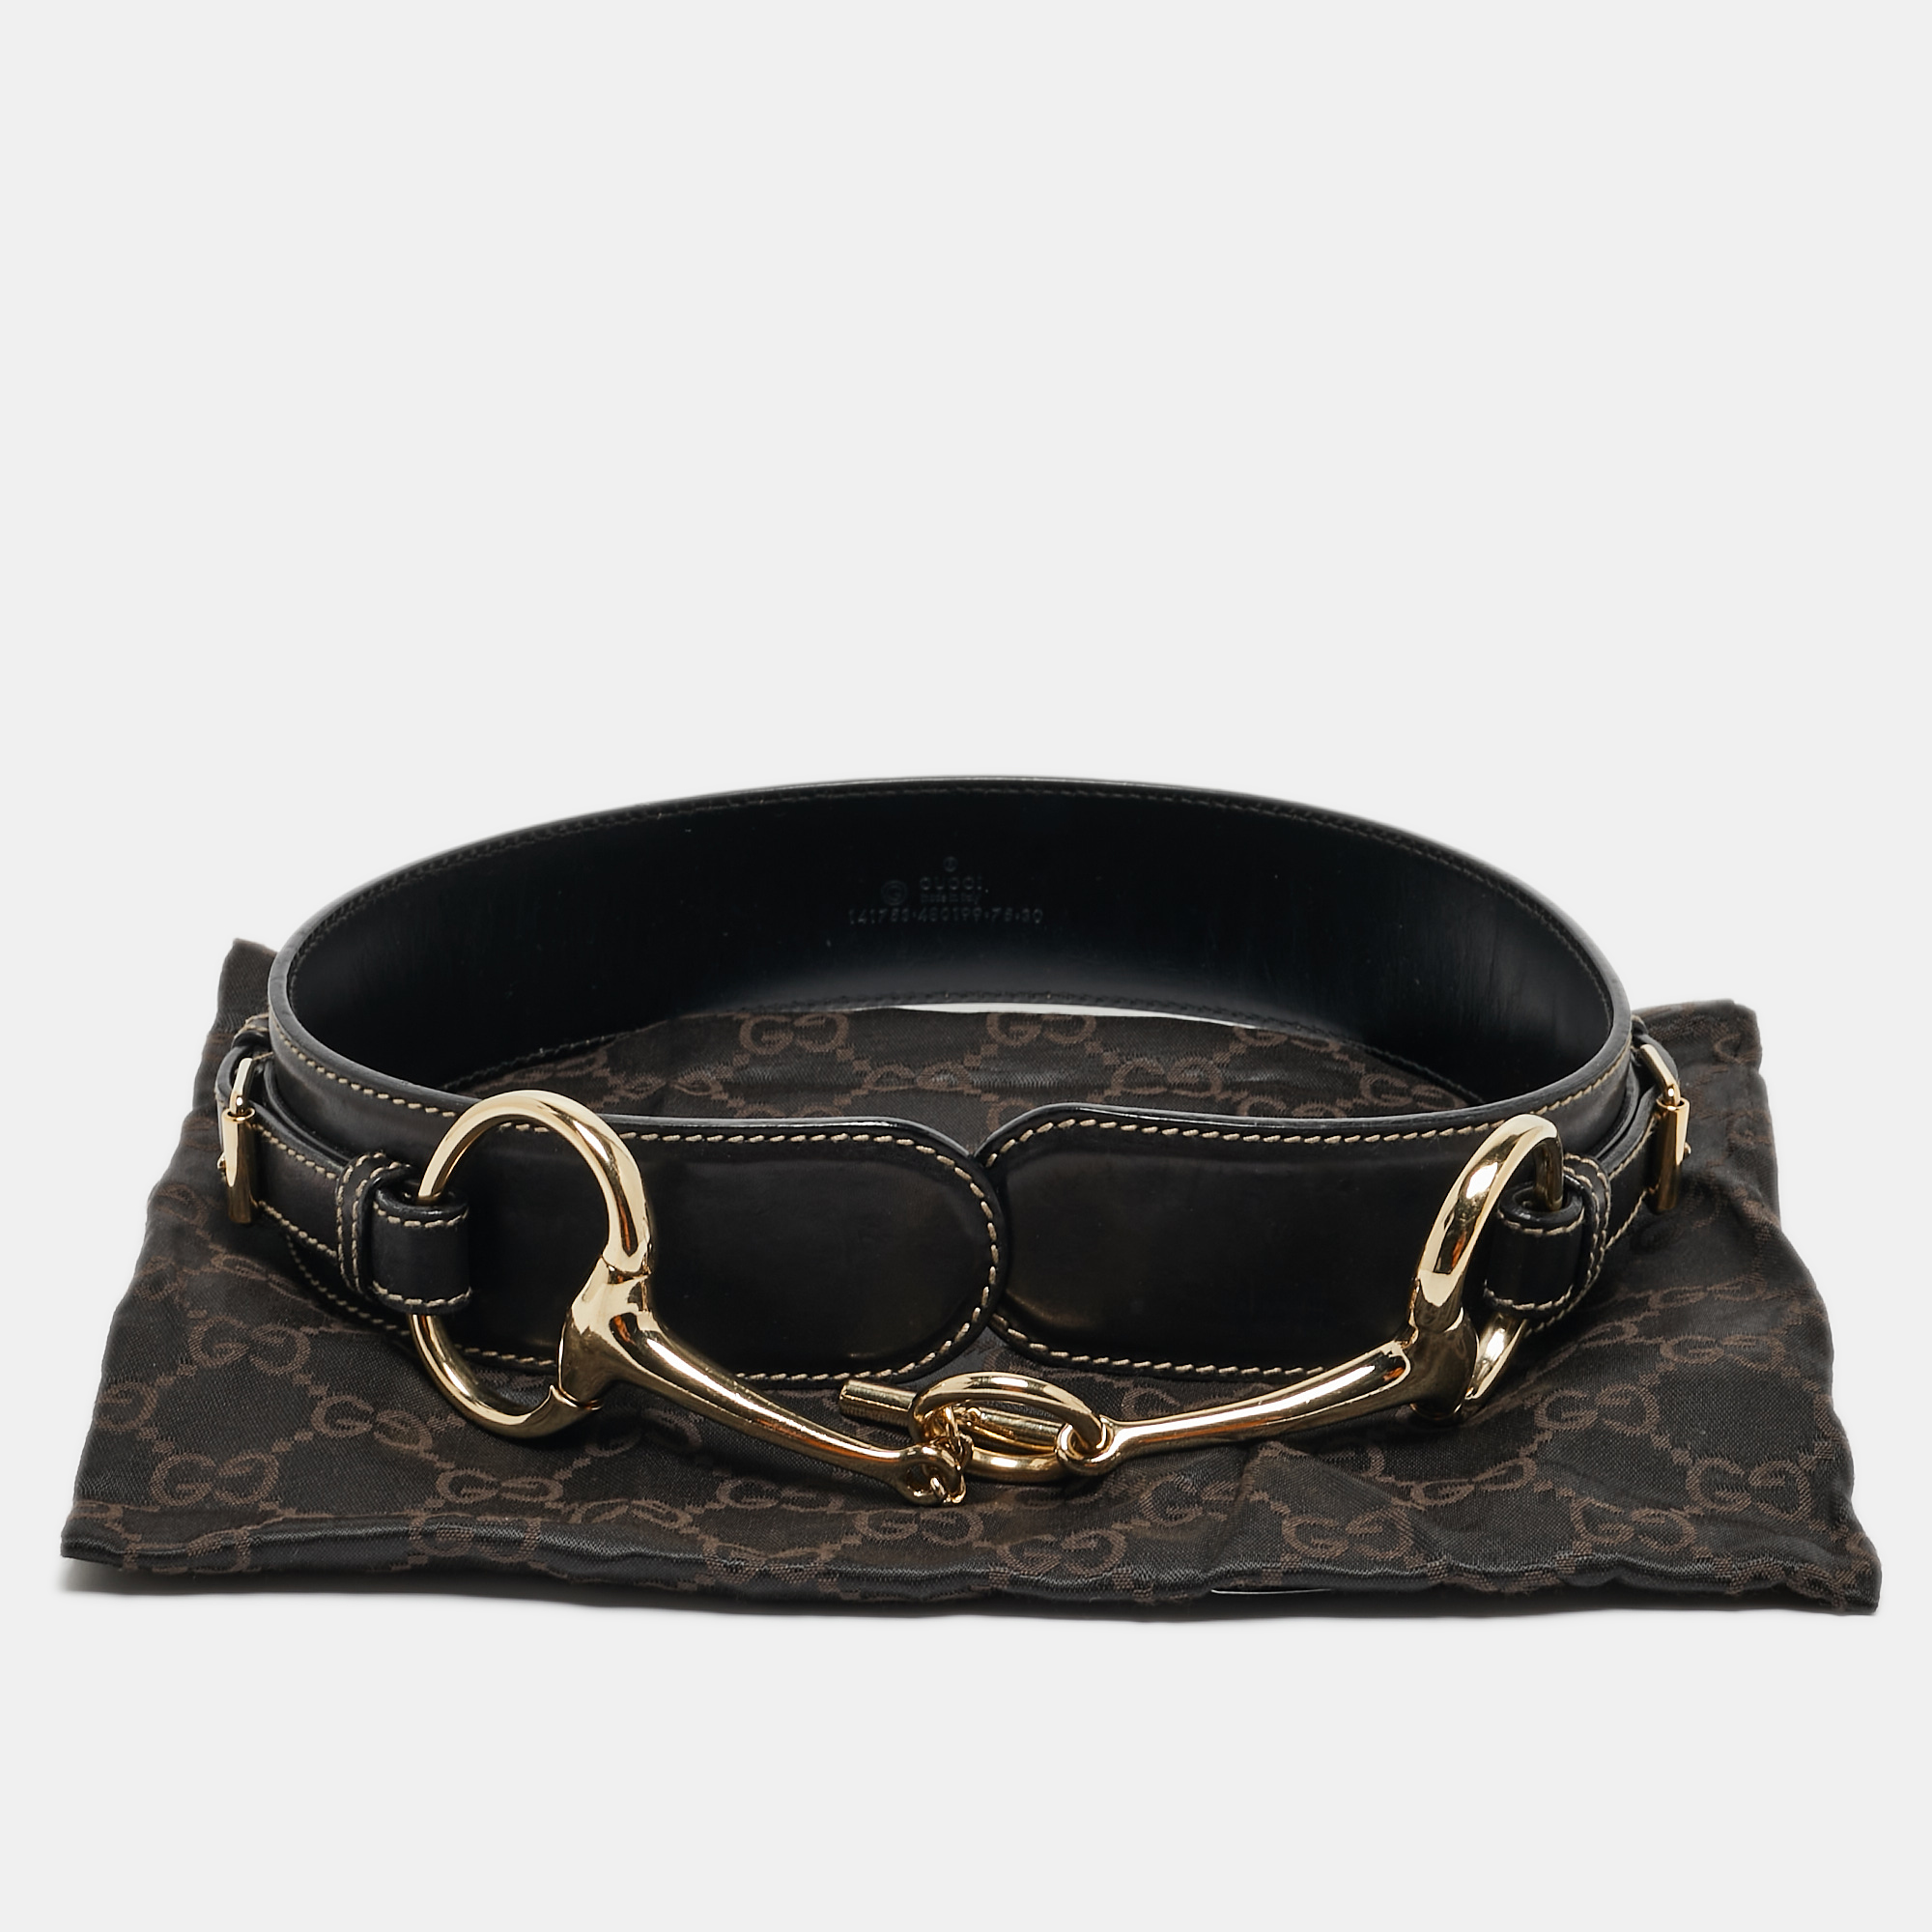 Gucci Black Leather Horsebit Buckle Belt 75CM